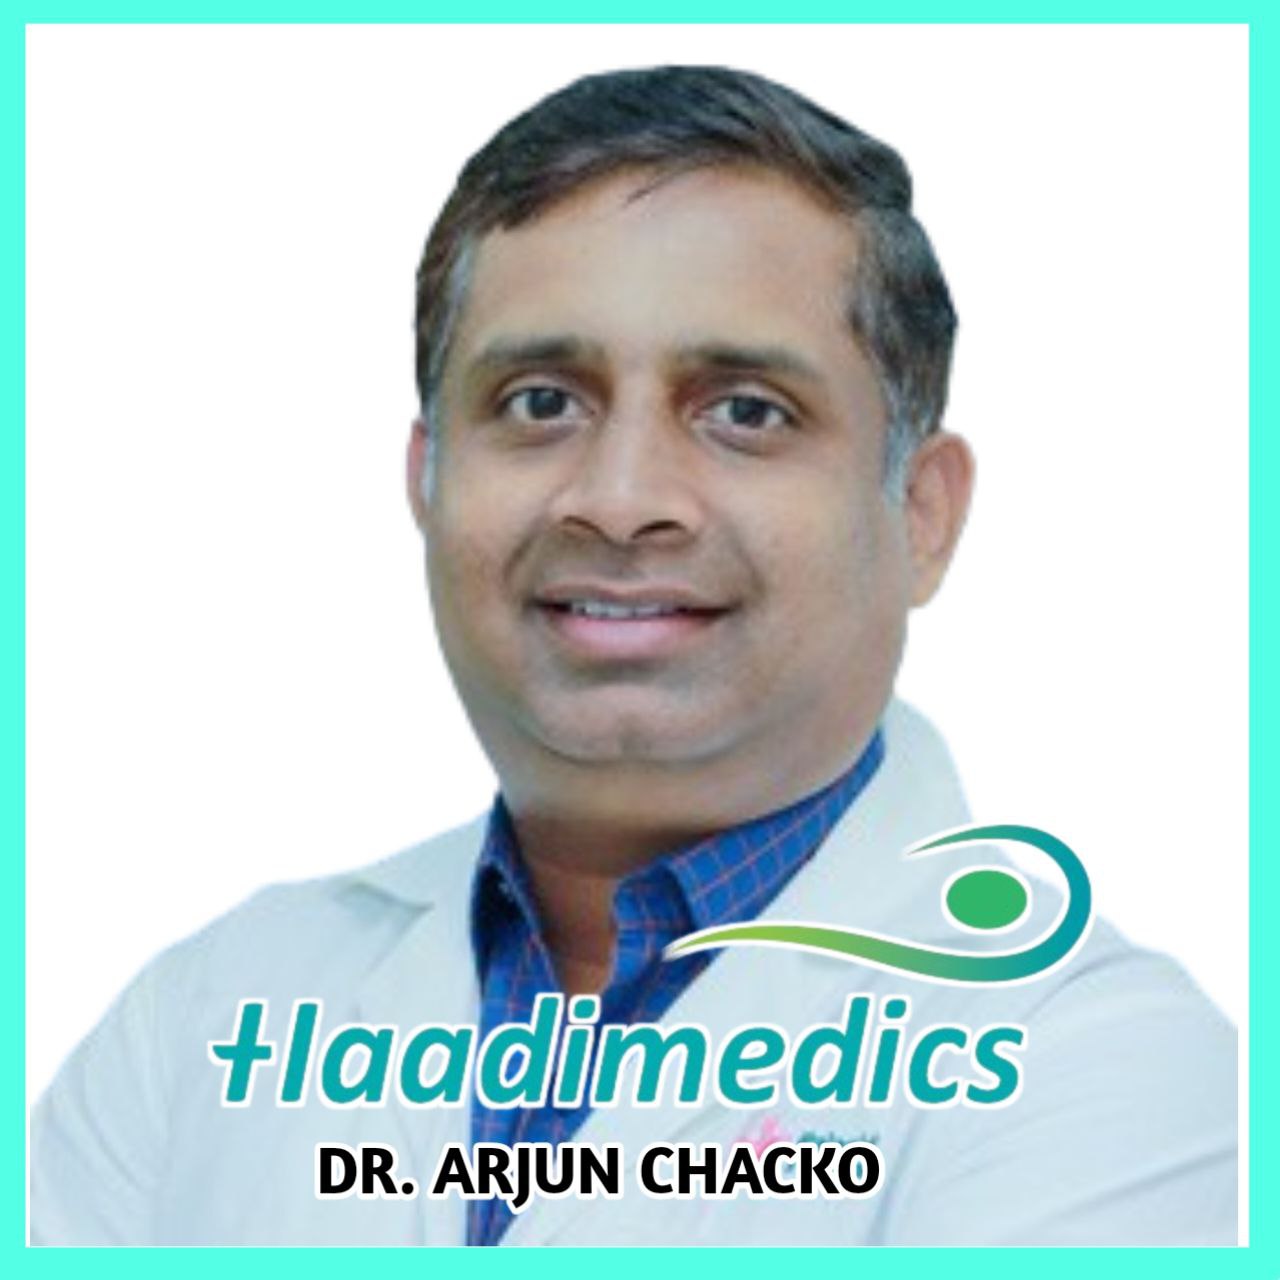 Dr. Arjun Chacko